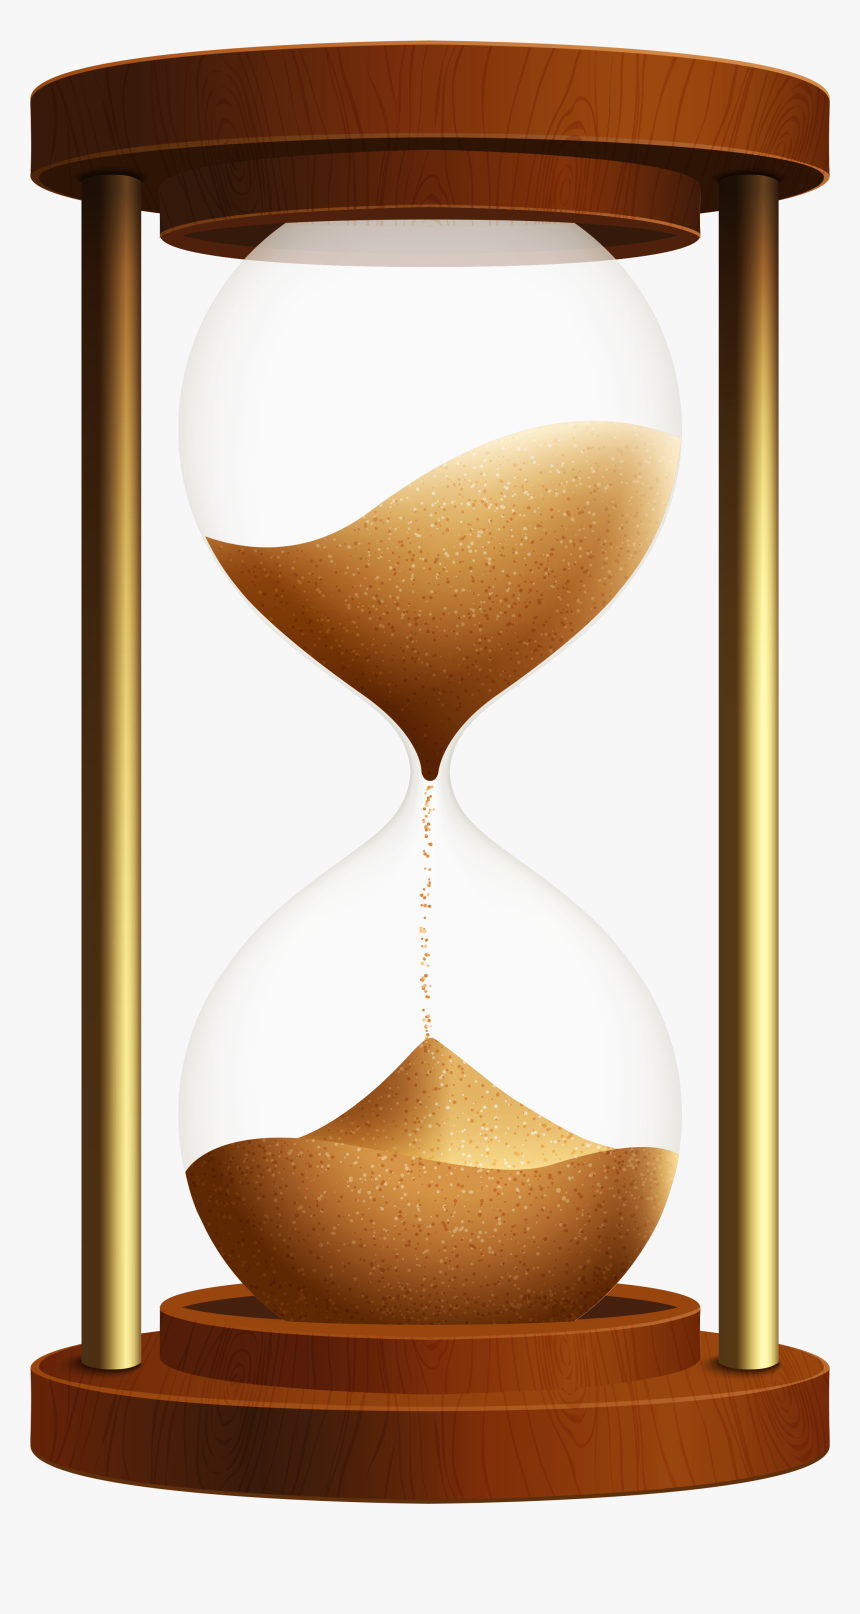 Sand Clock Png - Sand Clock Png Transparent, Png Download, Free Download